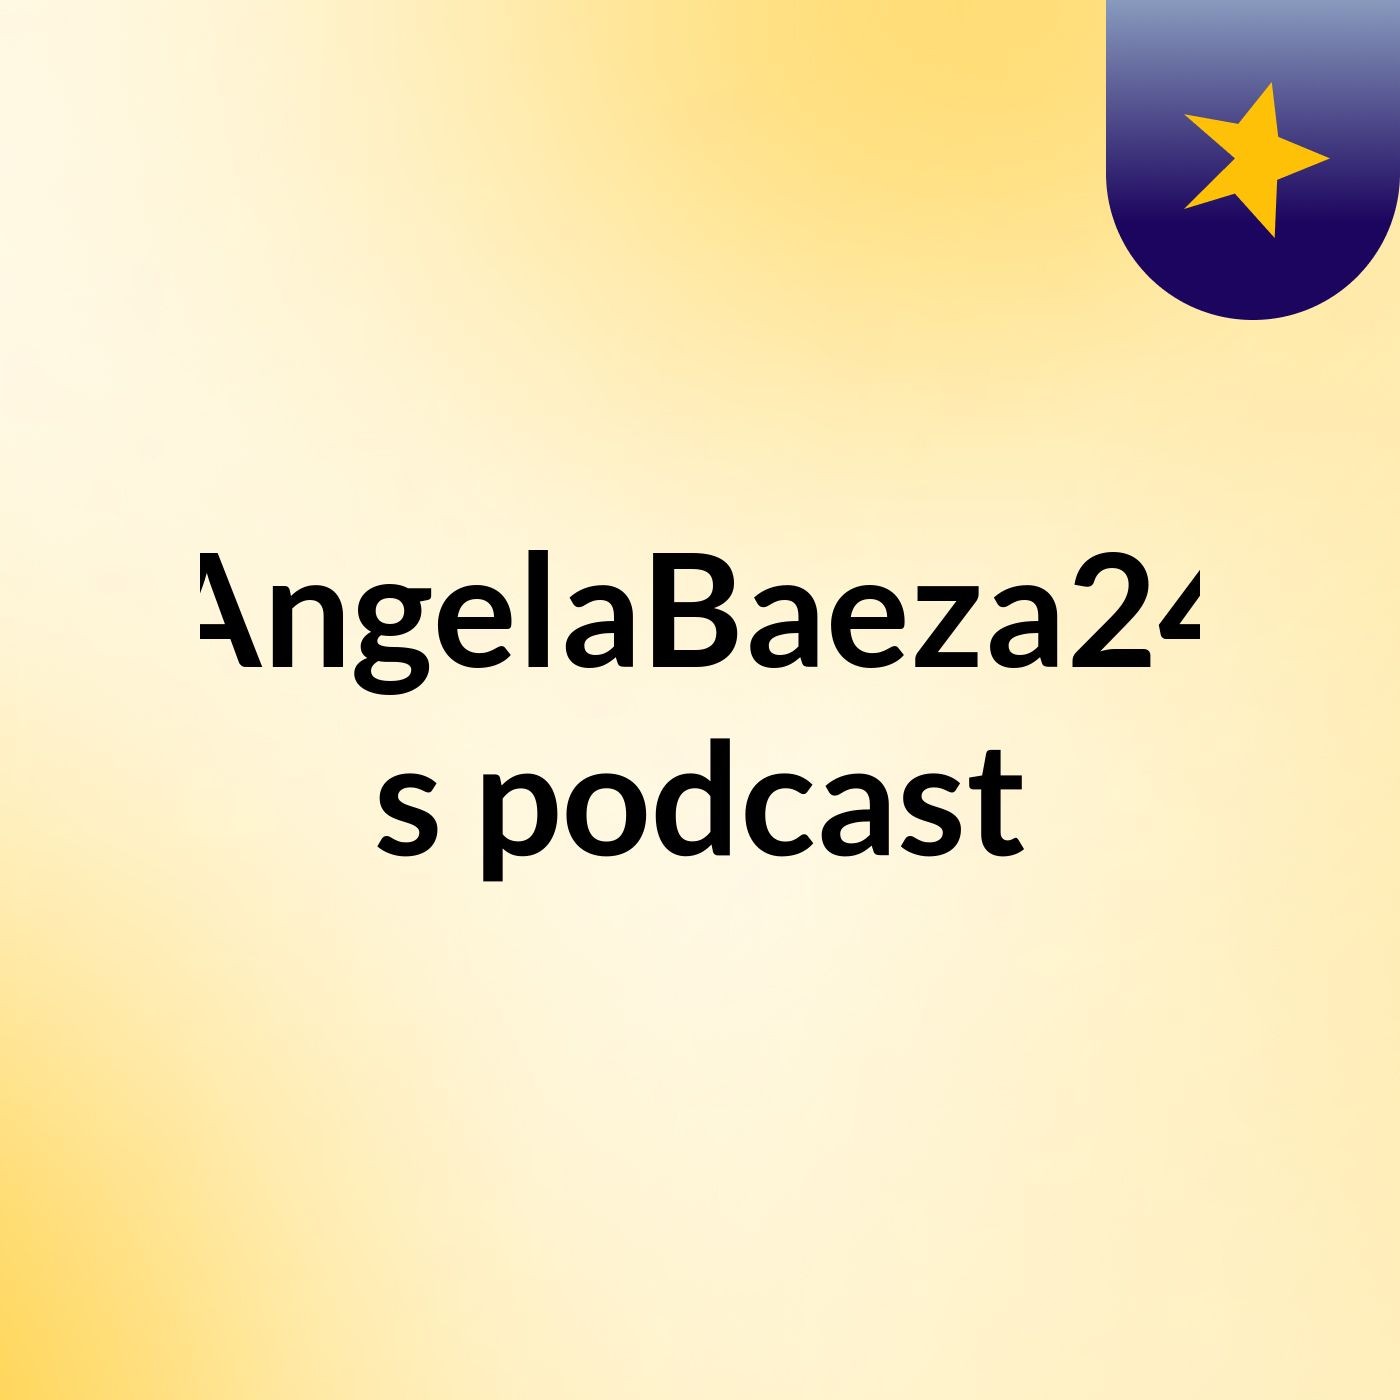 AngelaBaeza24's podcast